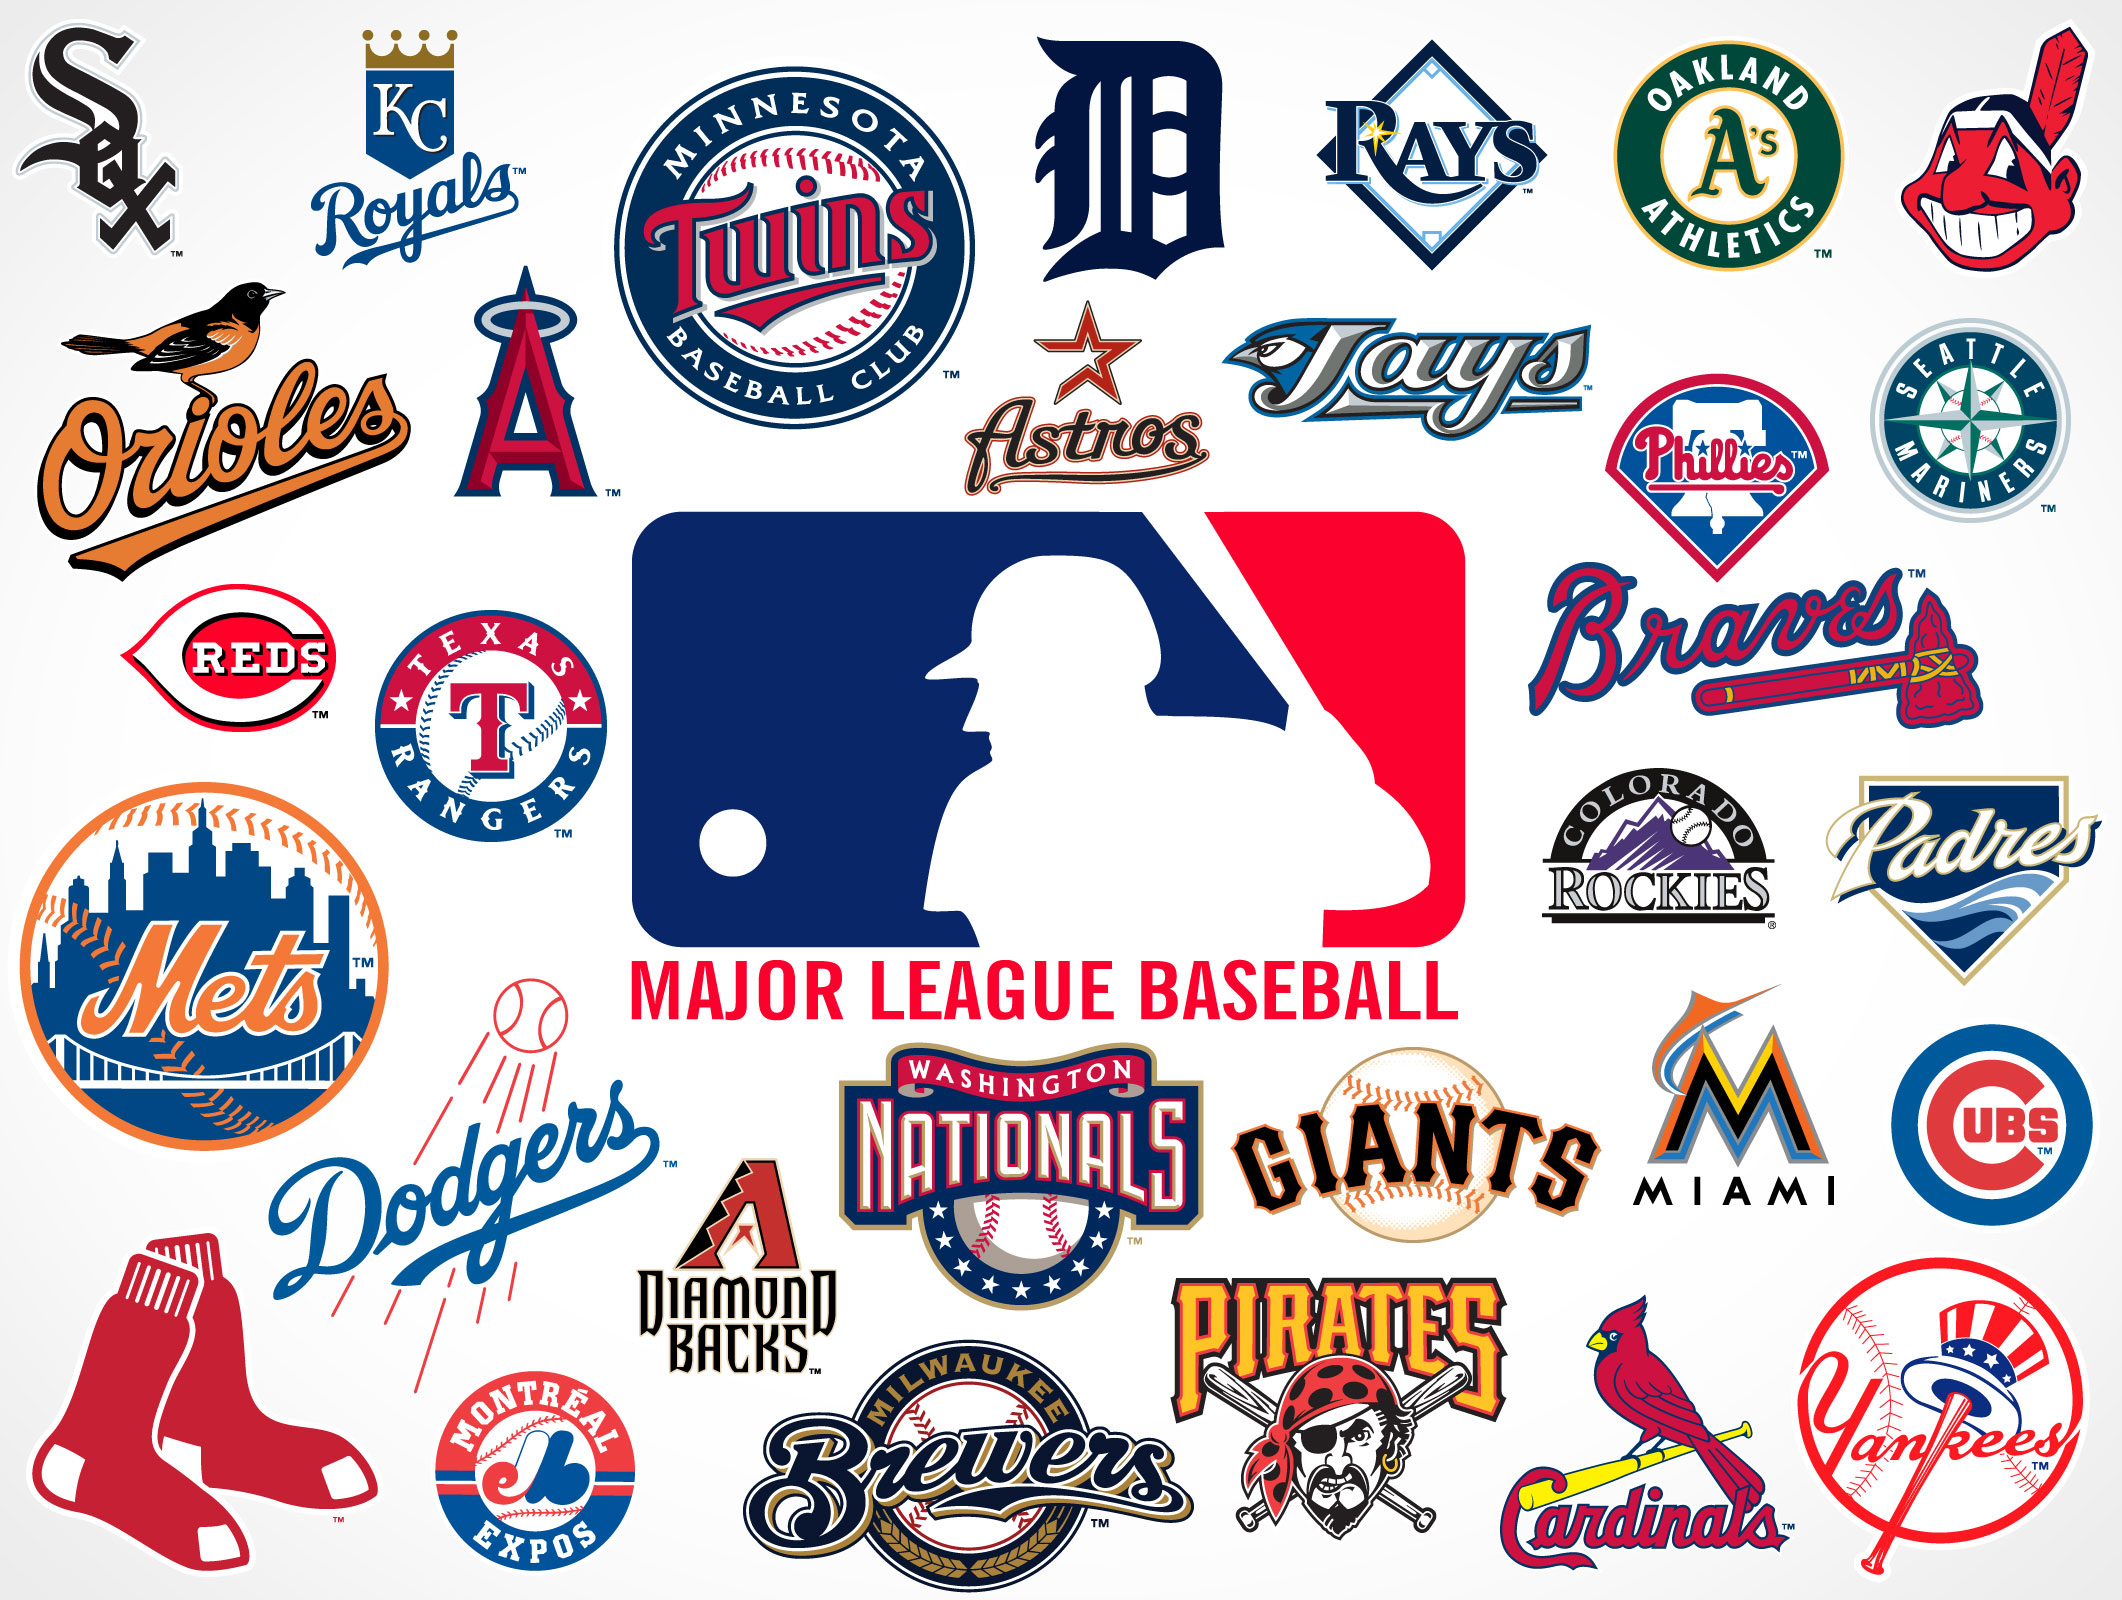 Art’s World – My Predictions for the 2018 Major League Baseball Season